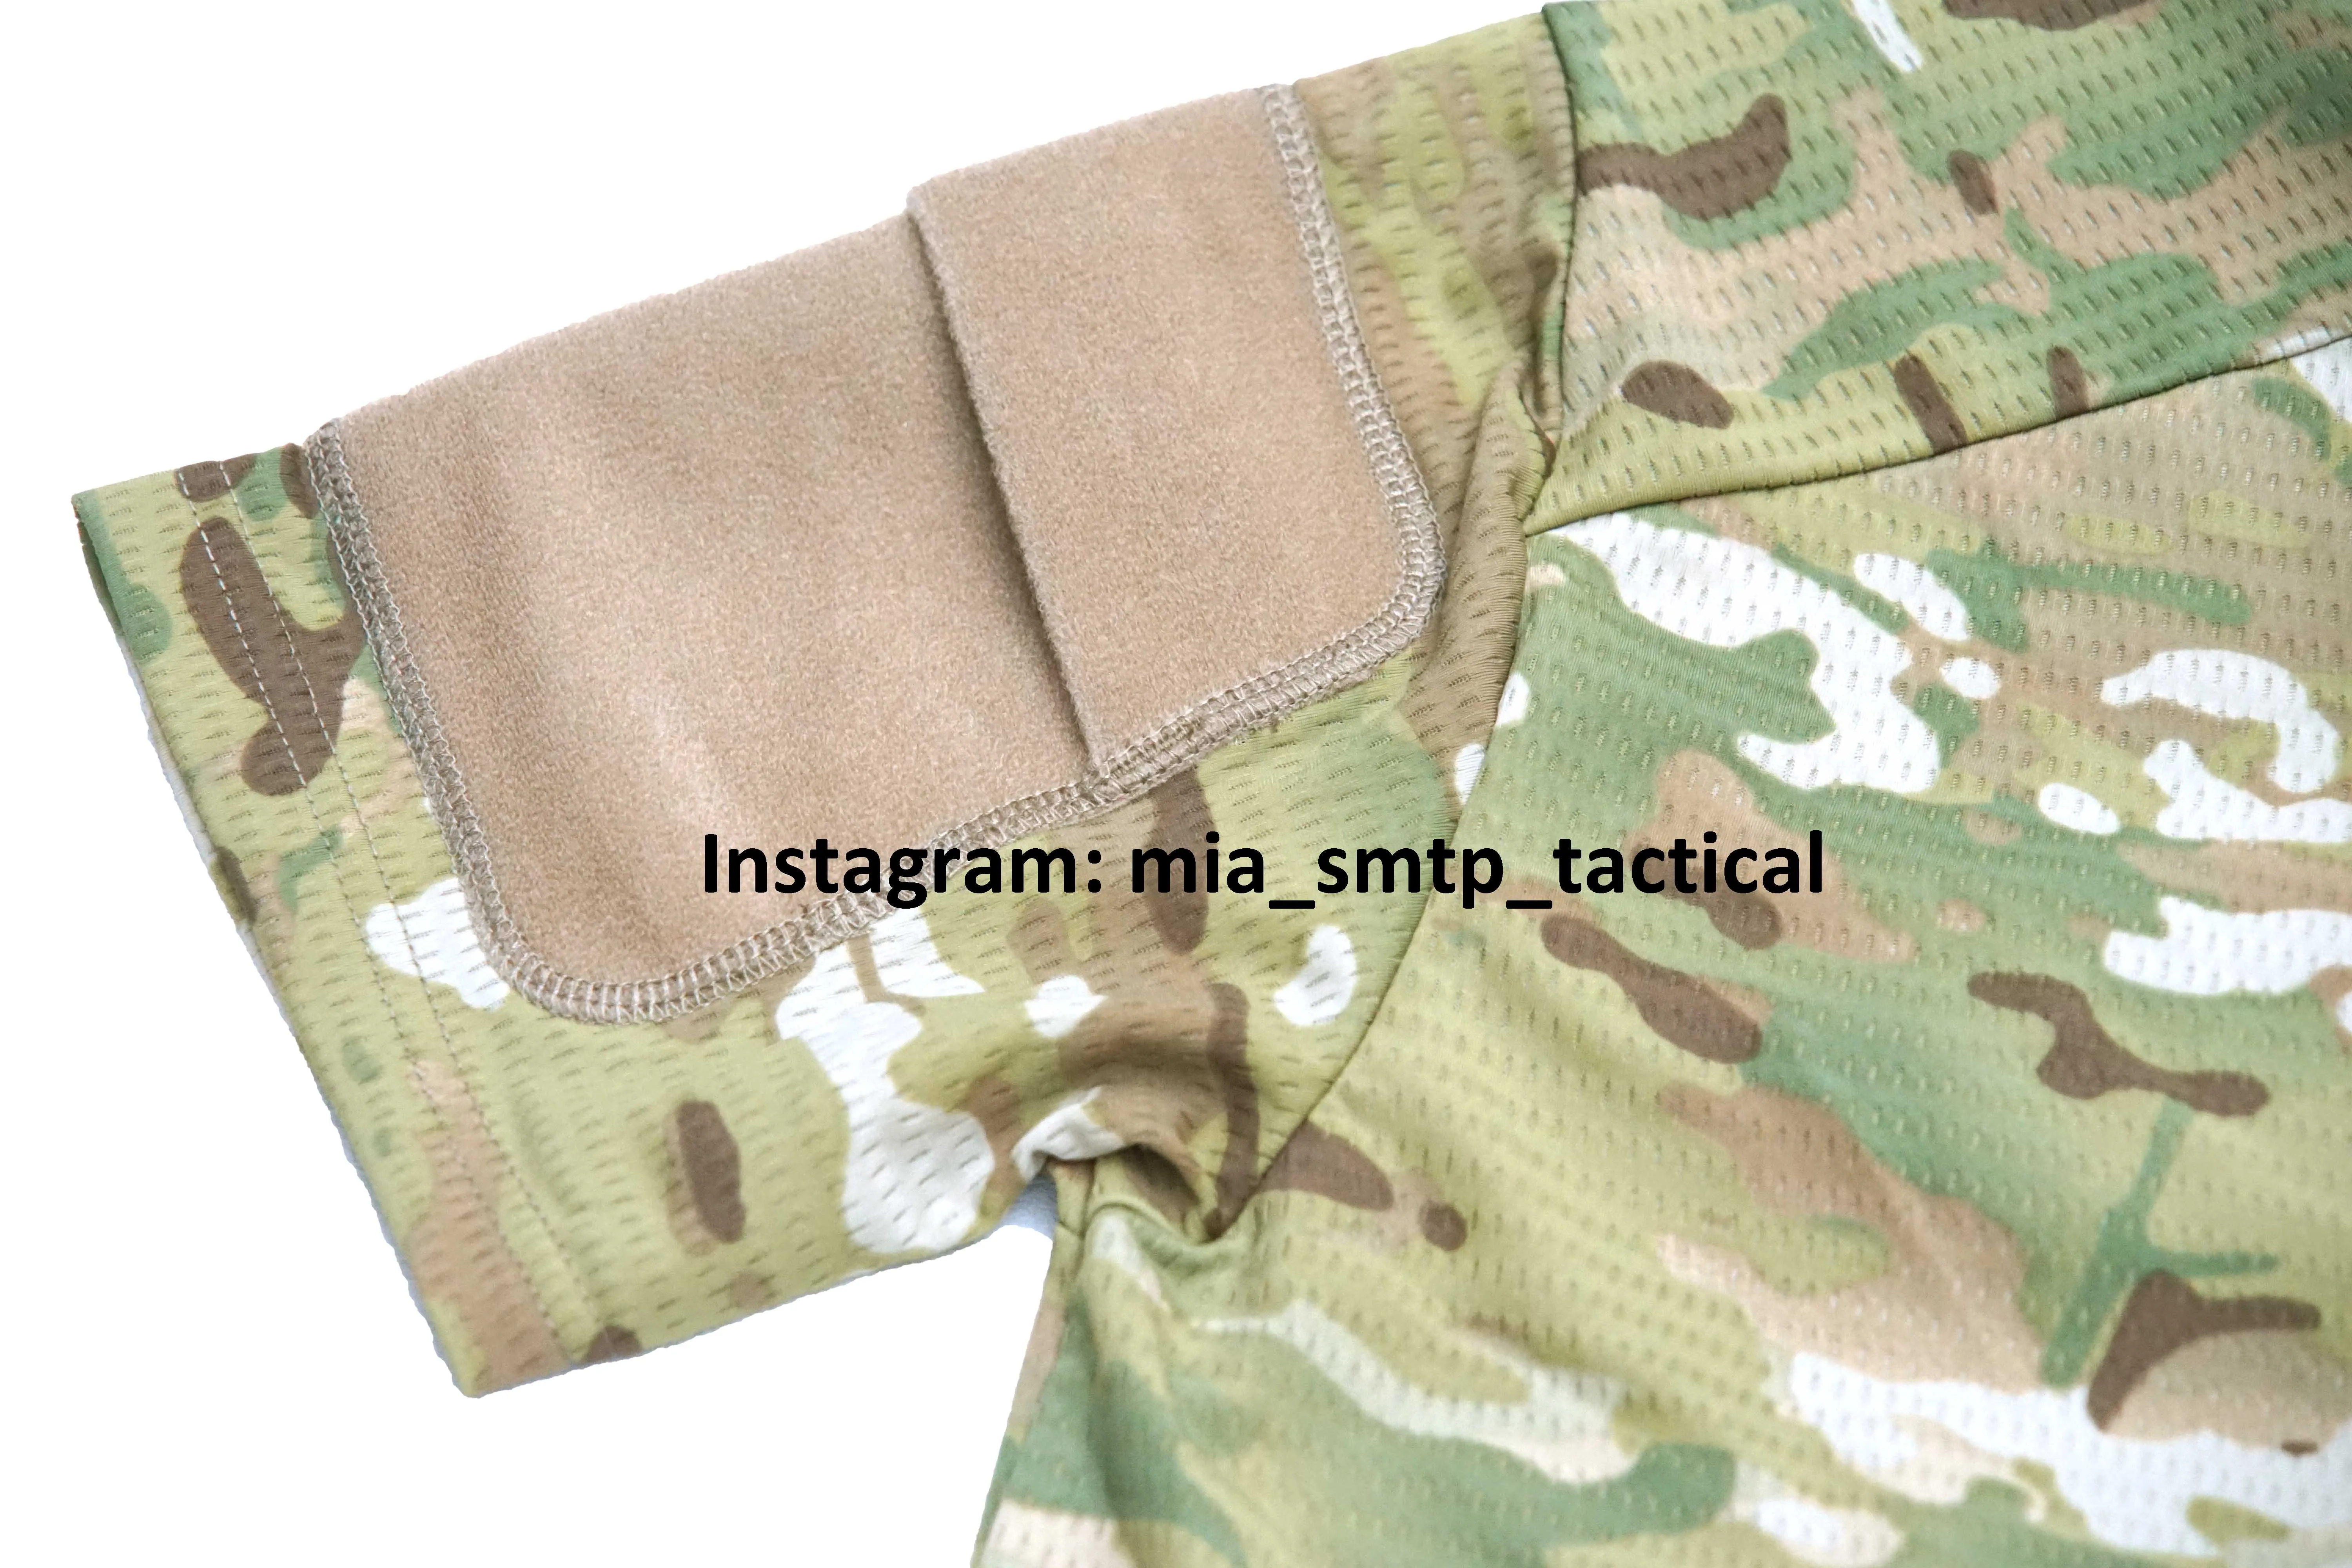 SMTP002 MC Short Sleeves Shirt Tactical Vs Combat Shirt Short Sleeves MC Tactical Shirt